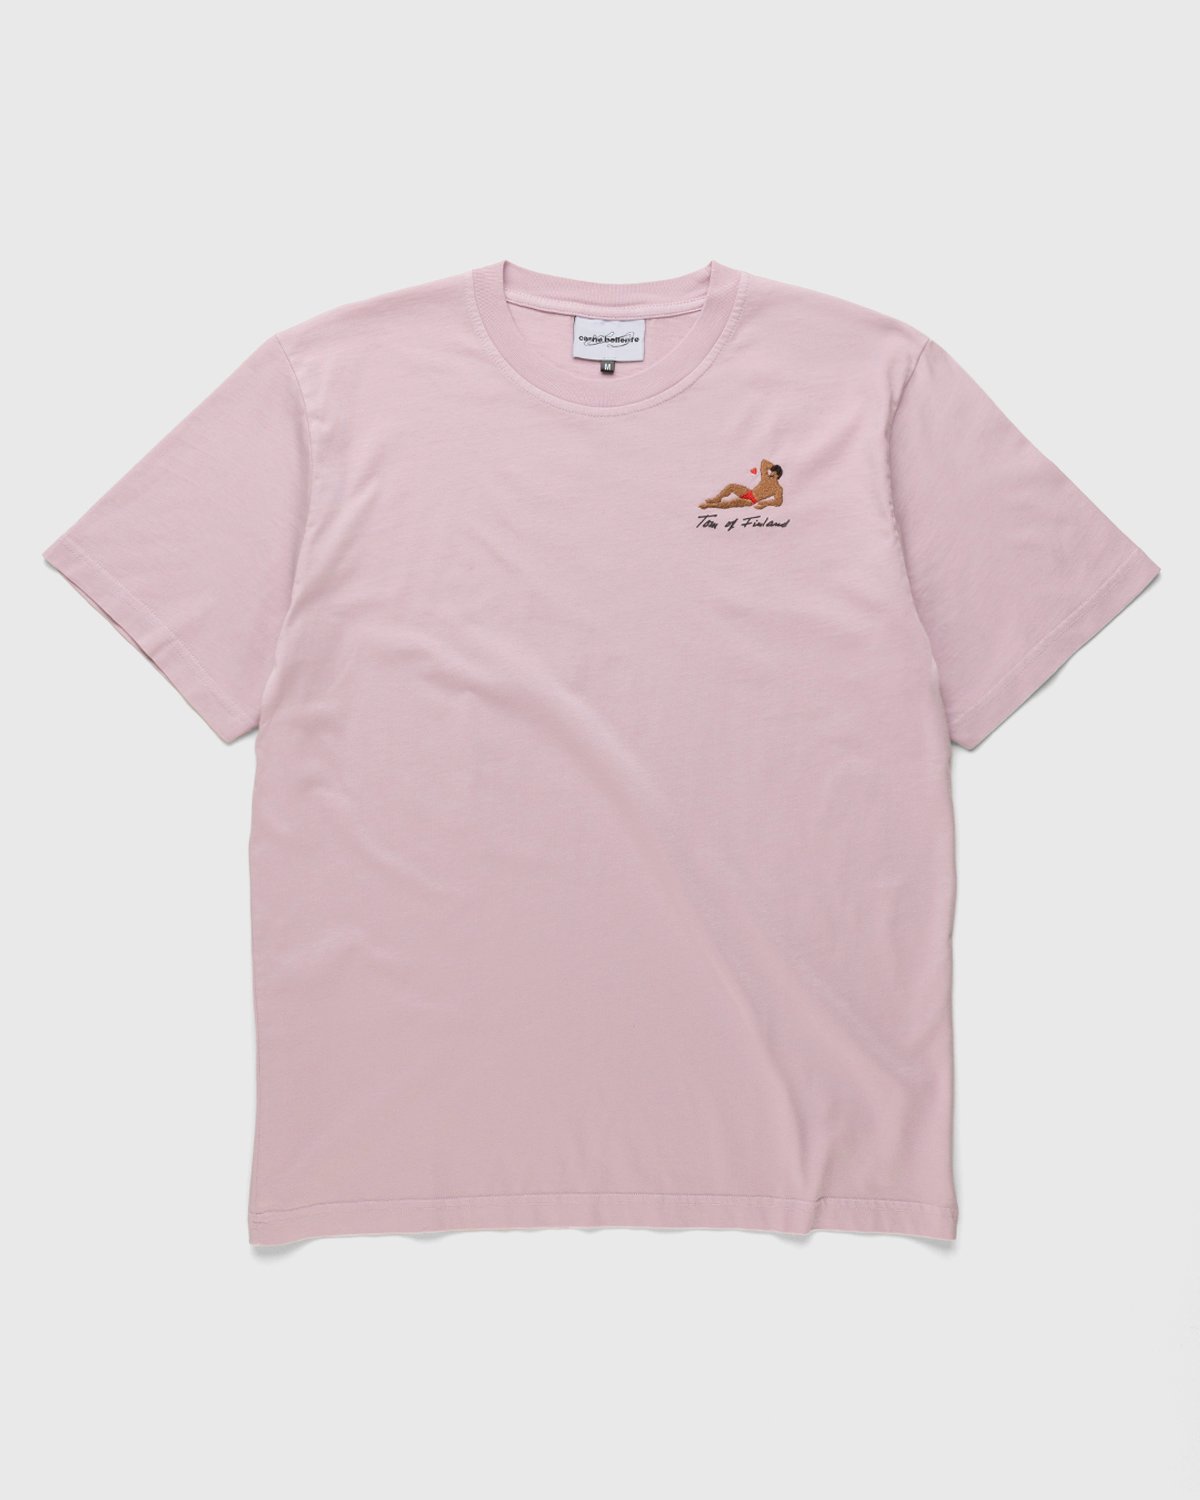 Carne Bollente - Gays Of Wonder T-Shirt Pink - Clothing - Pink - Image 2